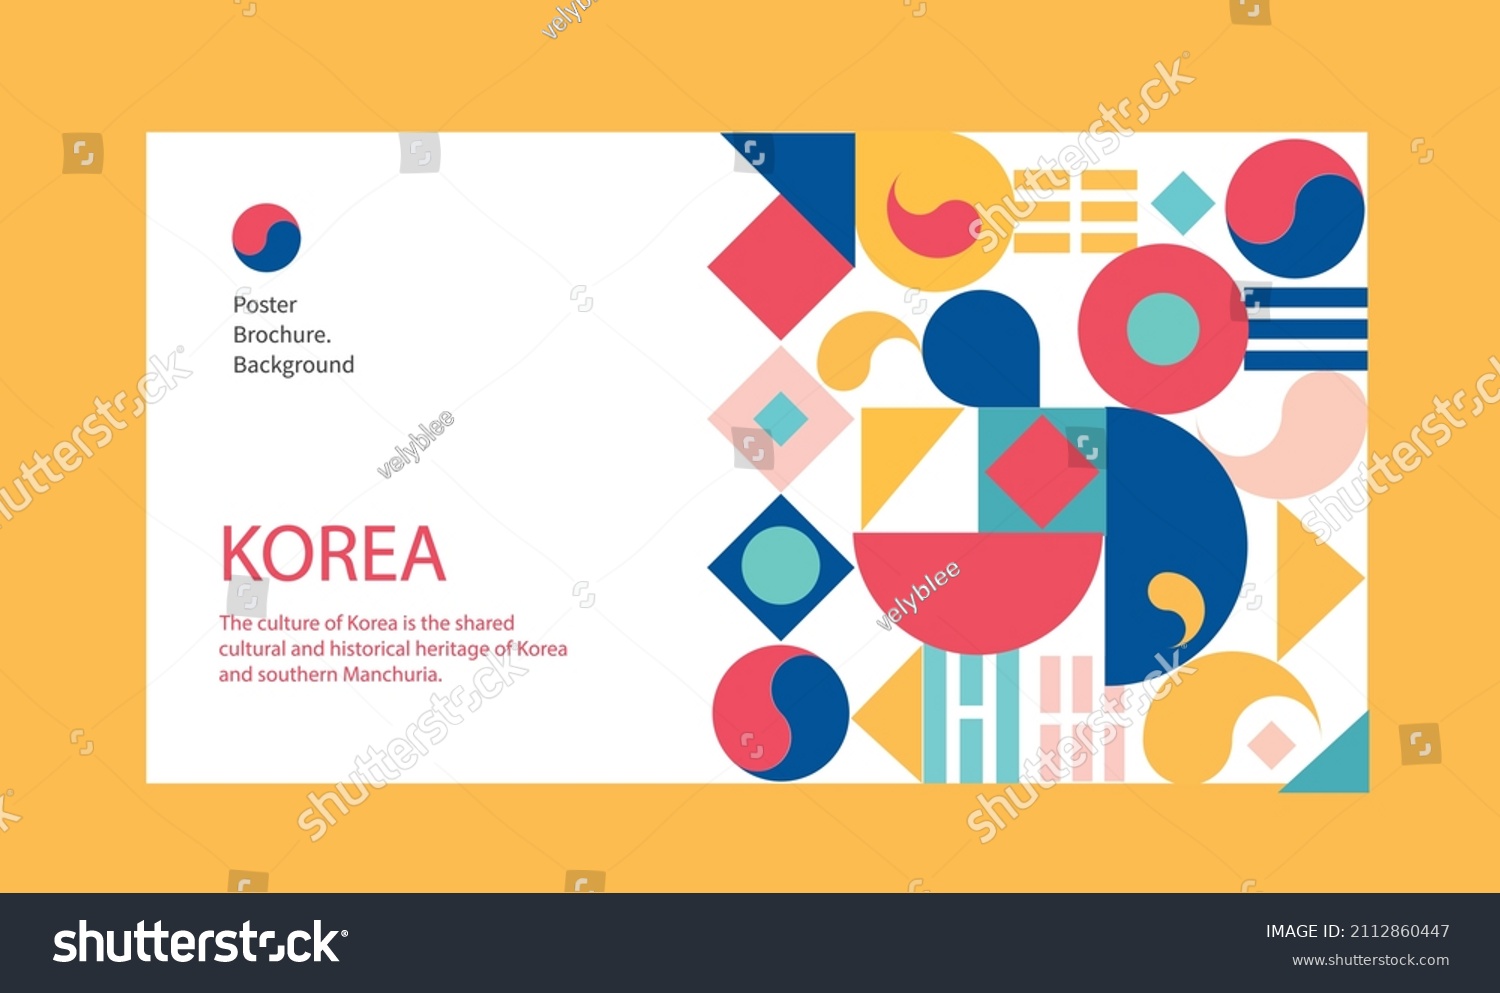 Gole koreanke pics